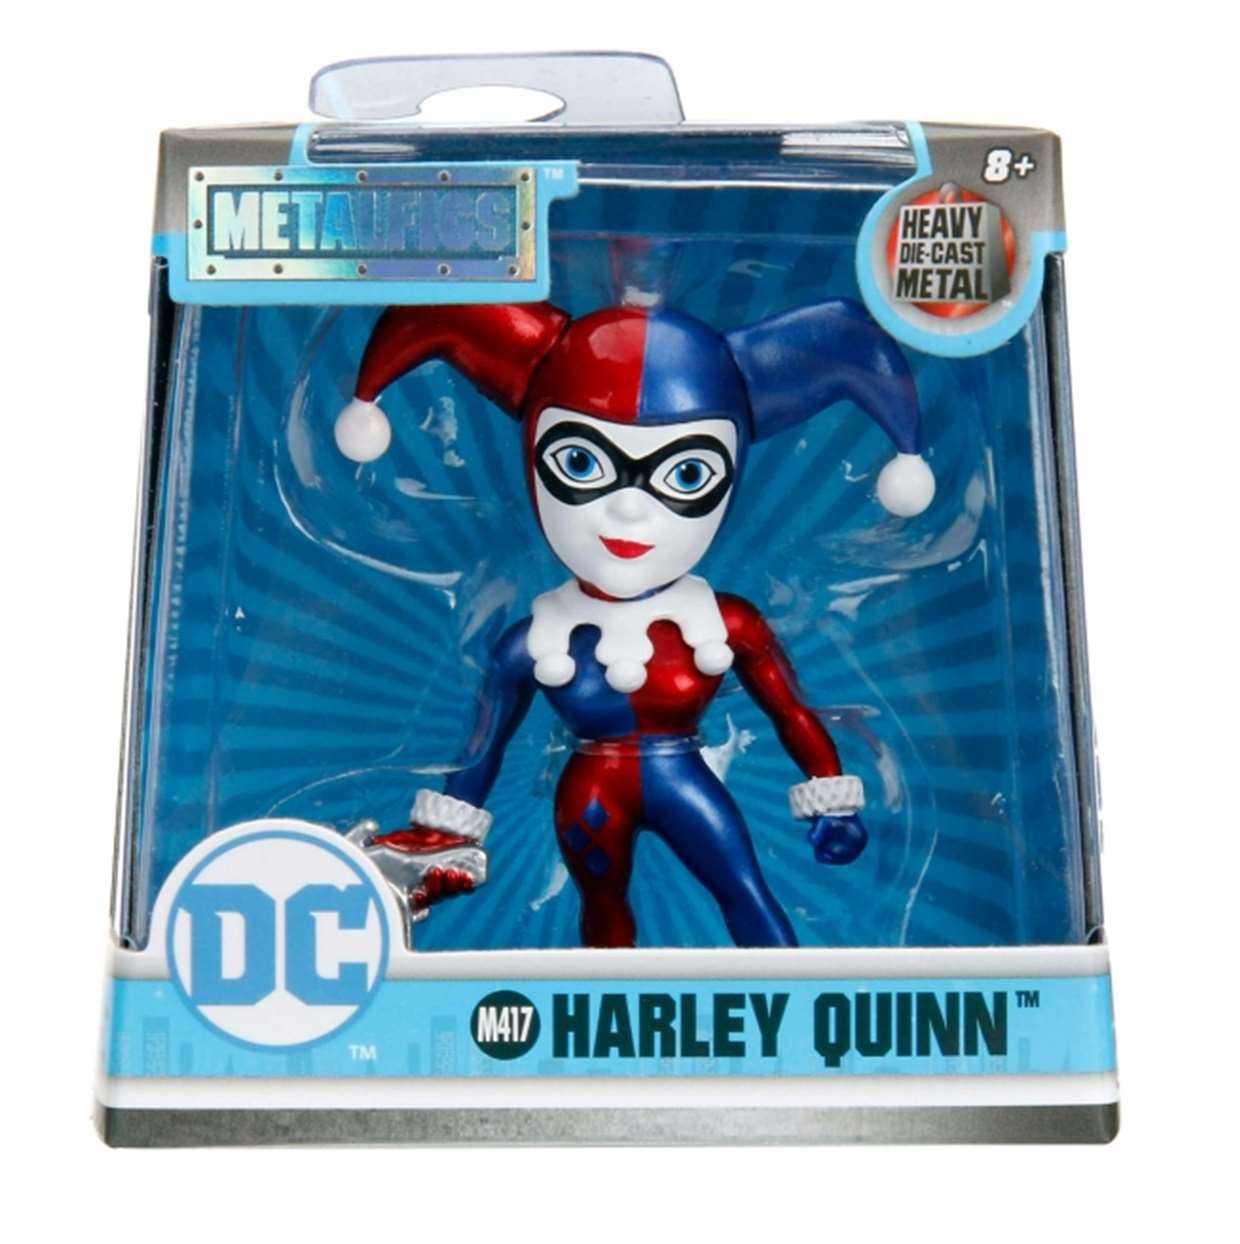 Harley Quinn M417 Figura Dc Comics Metalfigs Die Cast 2.5 